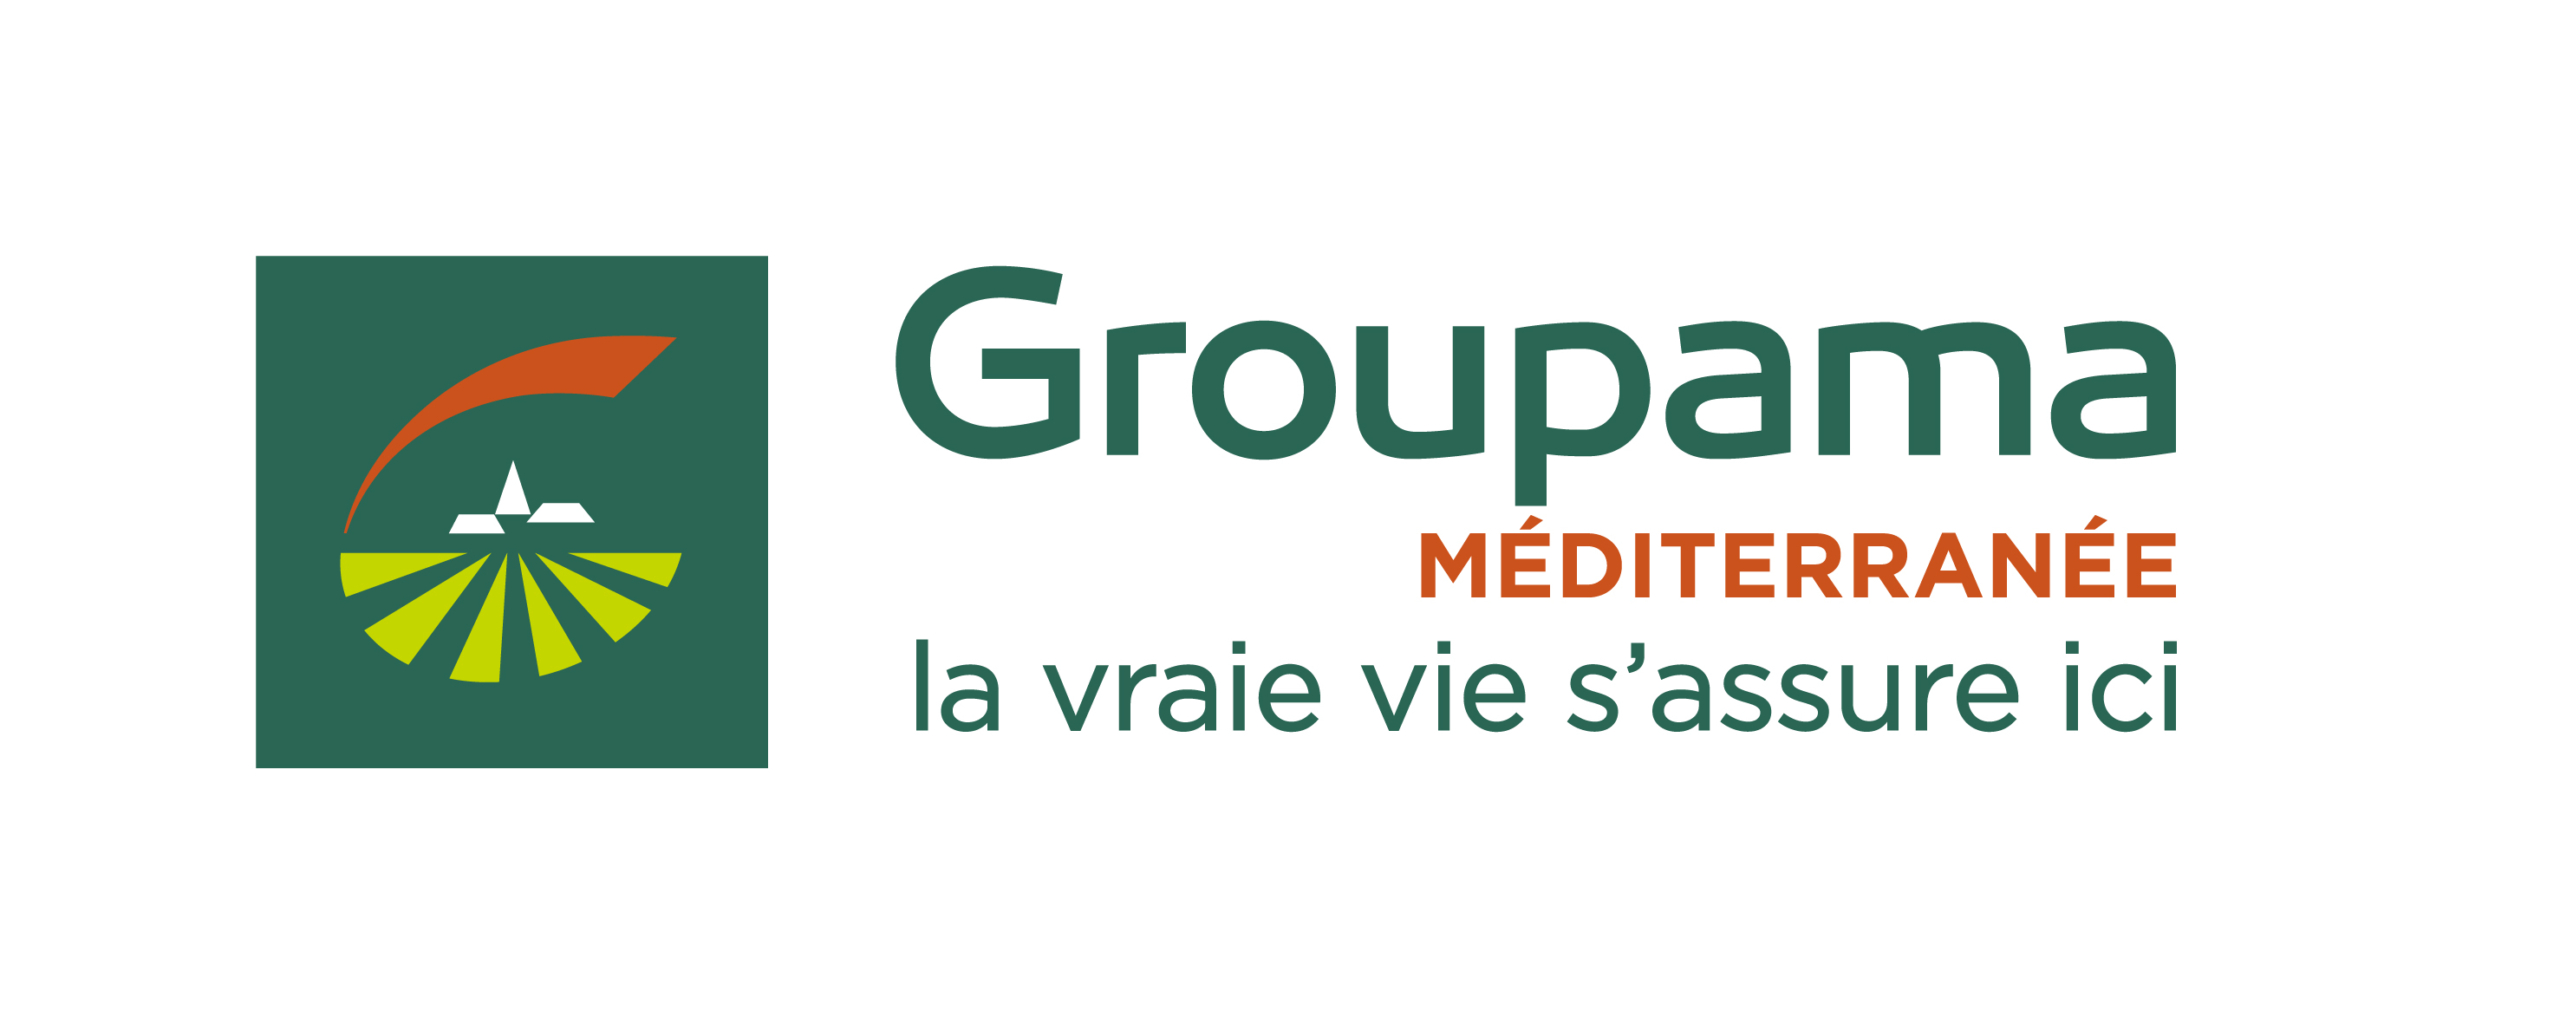 Groupama Méditerranée